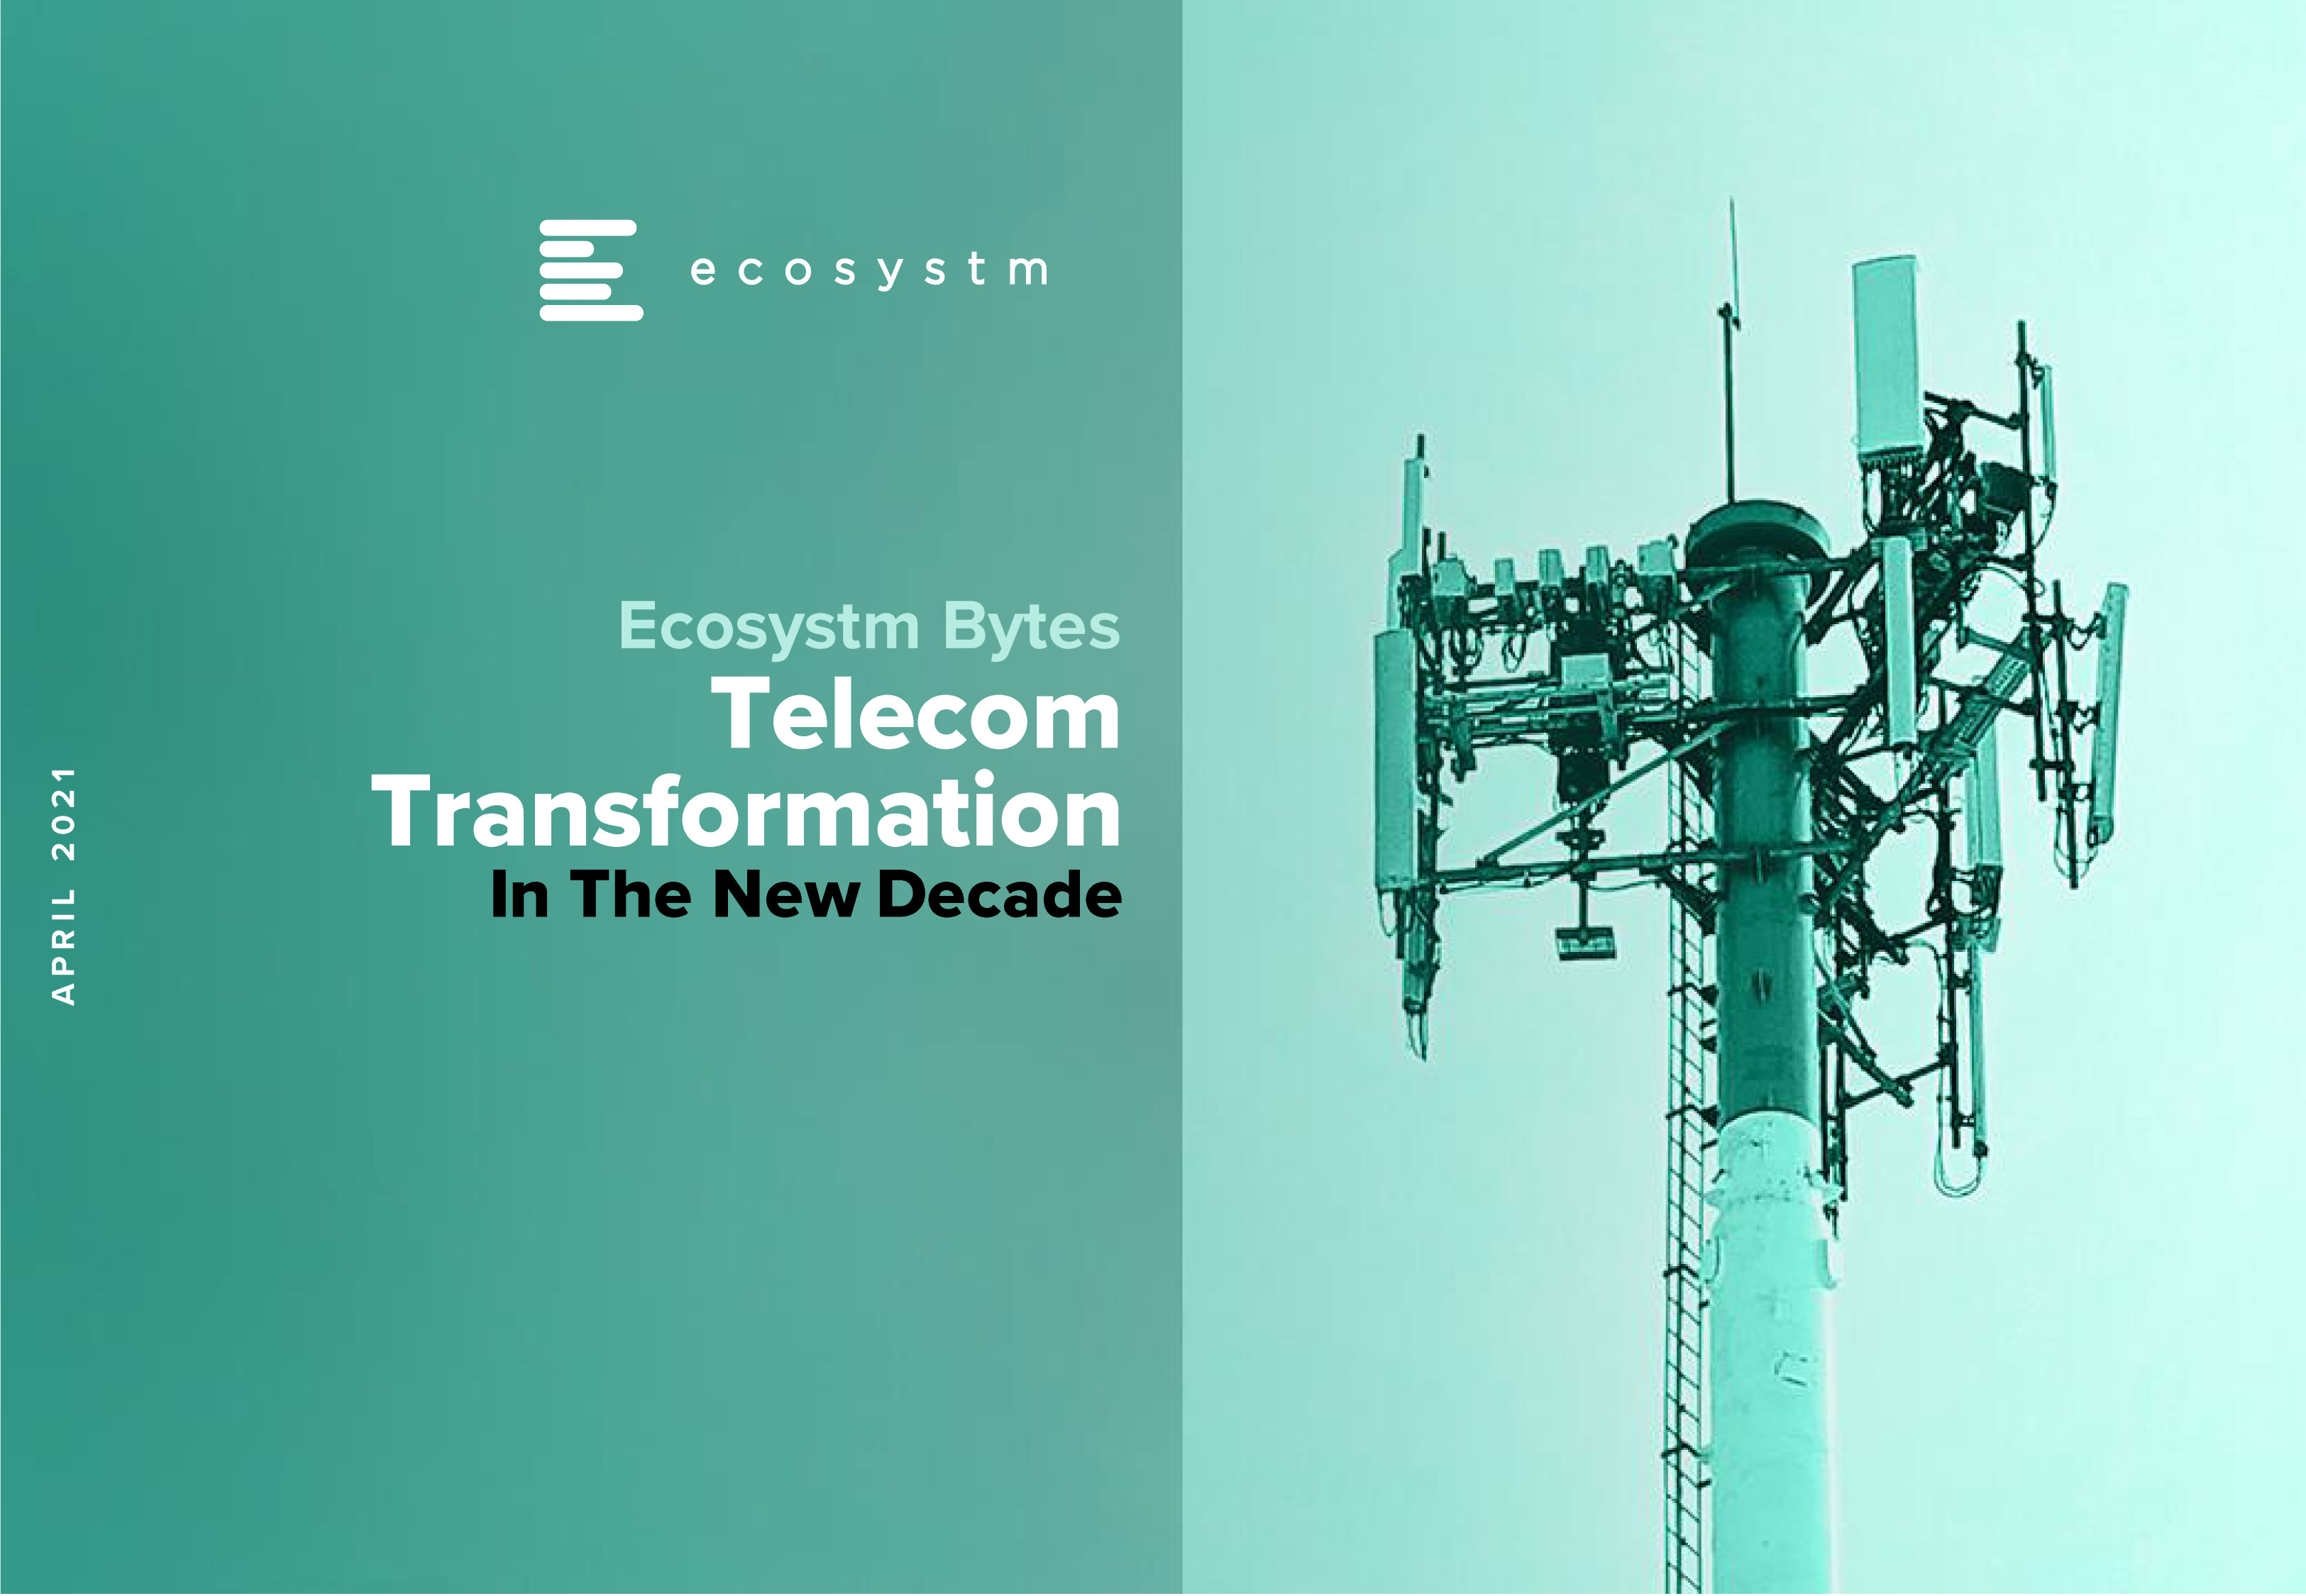 telecom-transformation-ecosystm-bytes-1